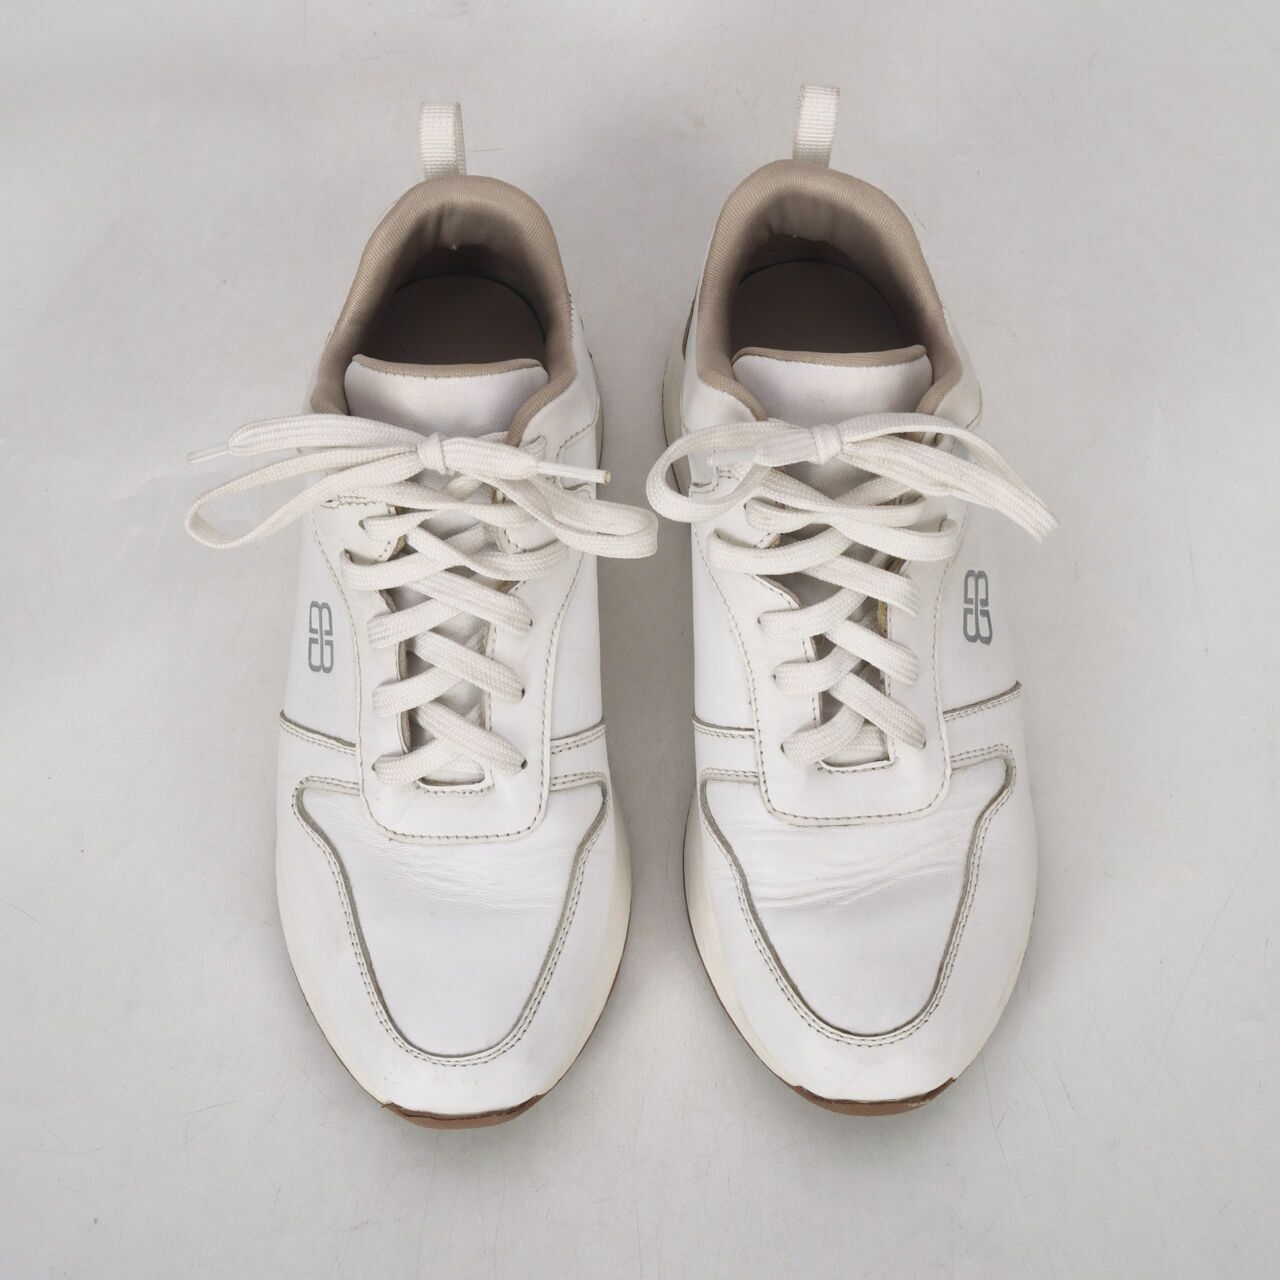 Buccheri White Sneakers